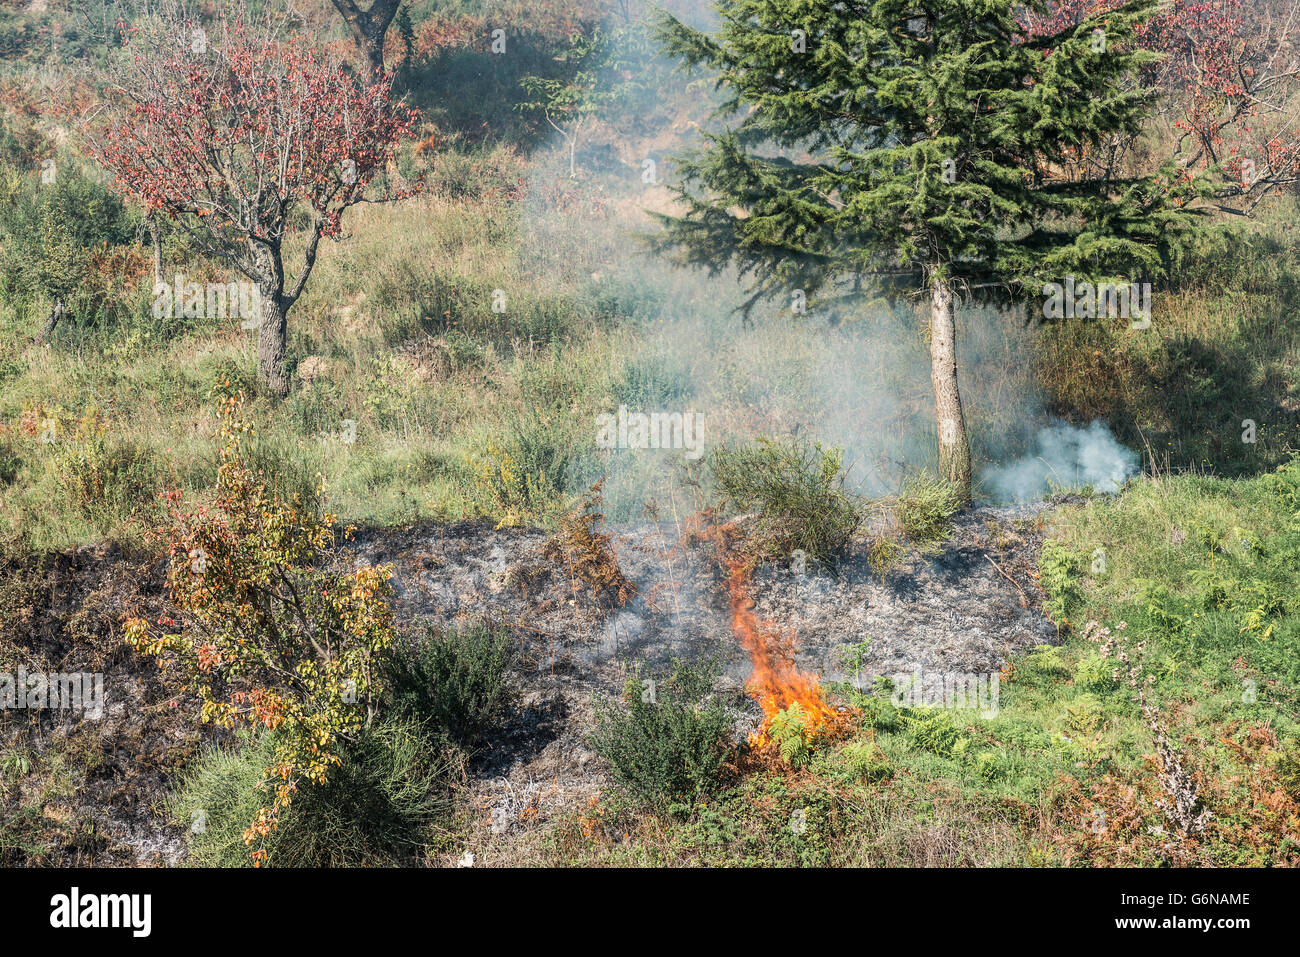 Sicily, Provincia di Messina, traditional forest fire Stock Photo